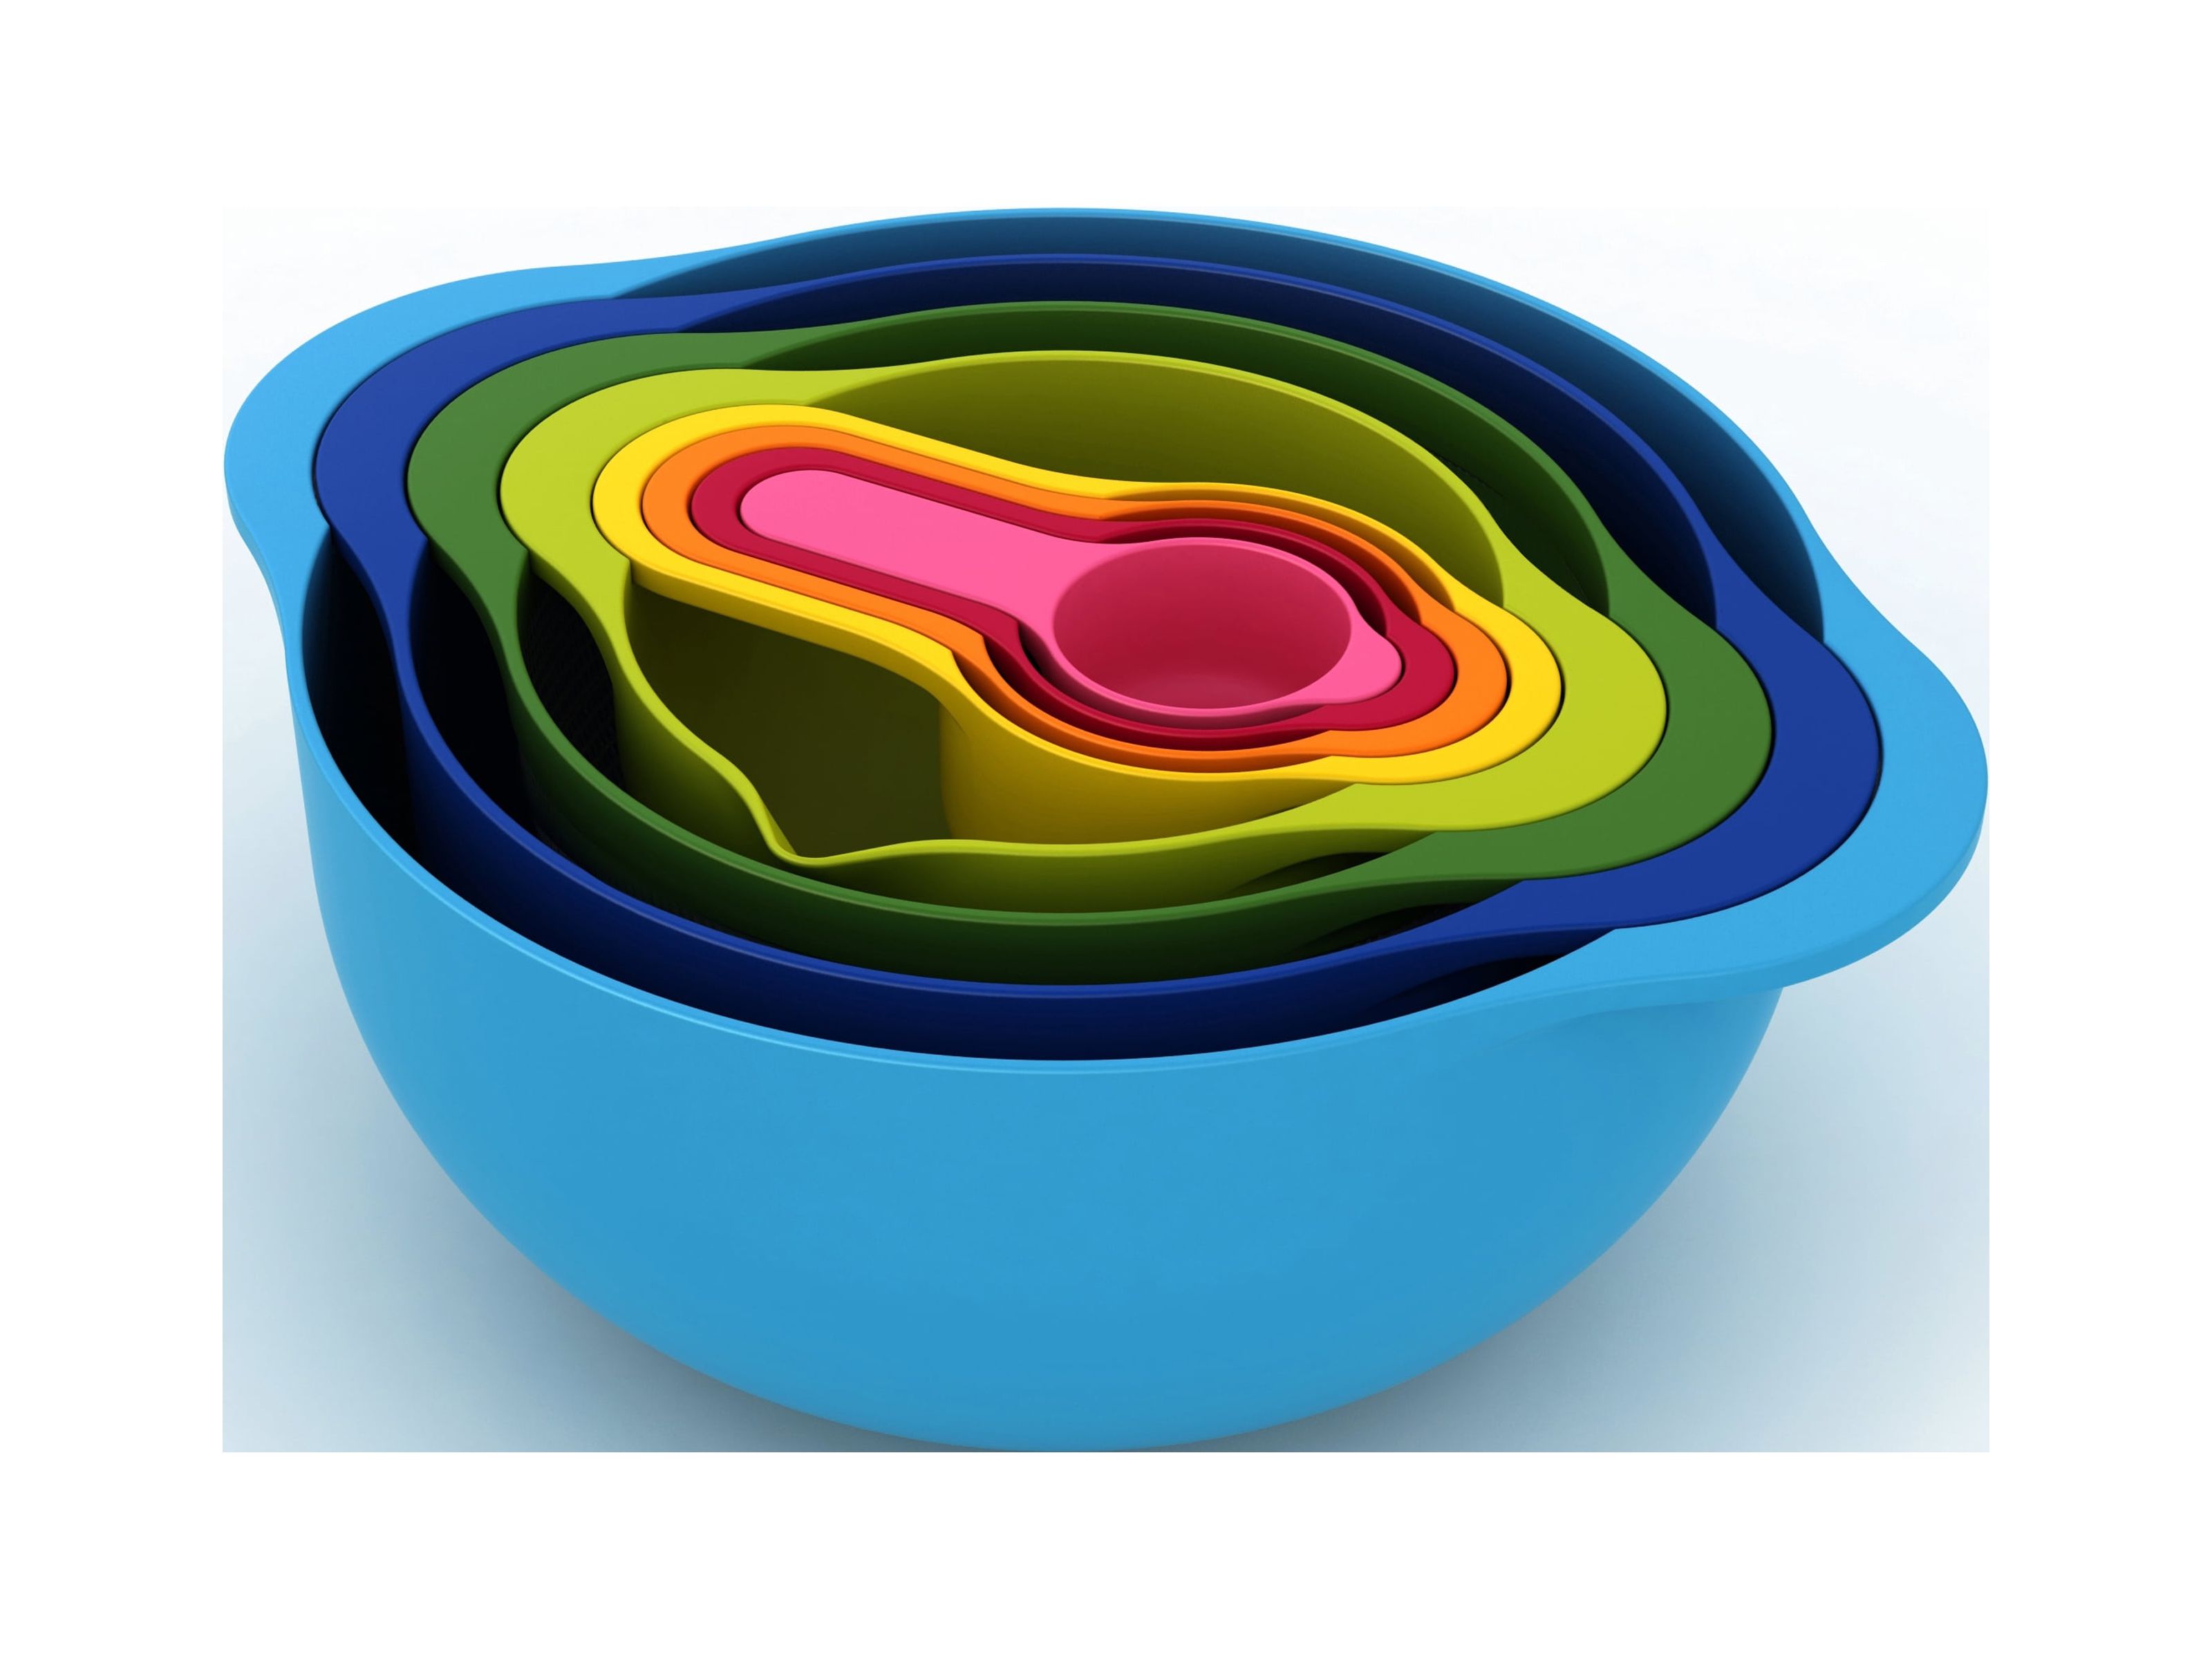 Joseph Joseph Duo 8- Food Preparation & Measuring Cup Space-Saving Set, Plastic, Multi-color - image 1 of 8